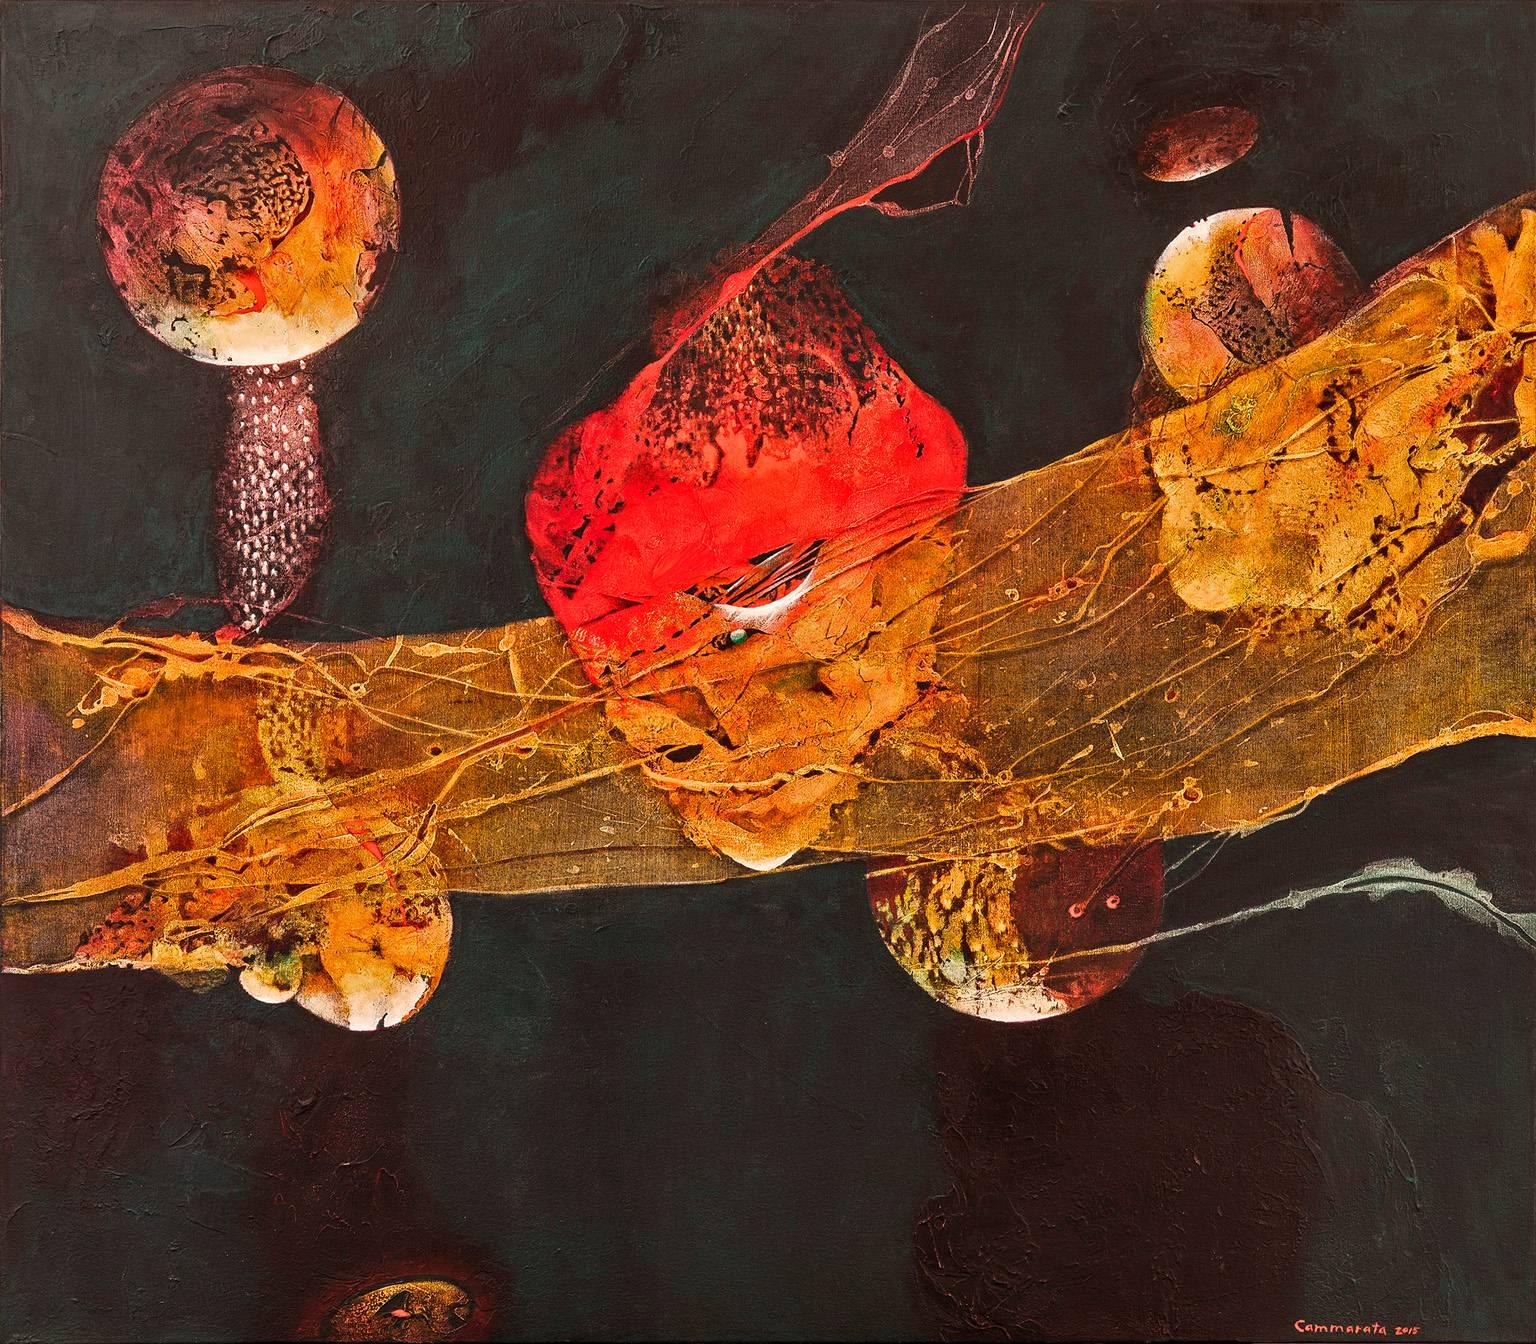 Abstract Painting Kathleen Cammarata - Pathos - Formes organiques - Peinture abstraite marron et rouge